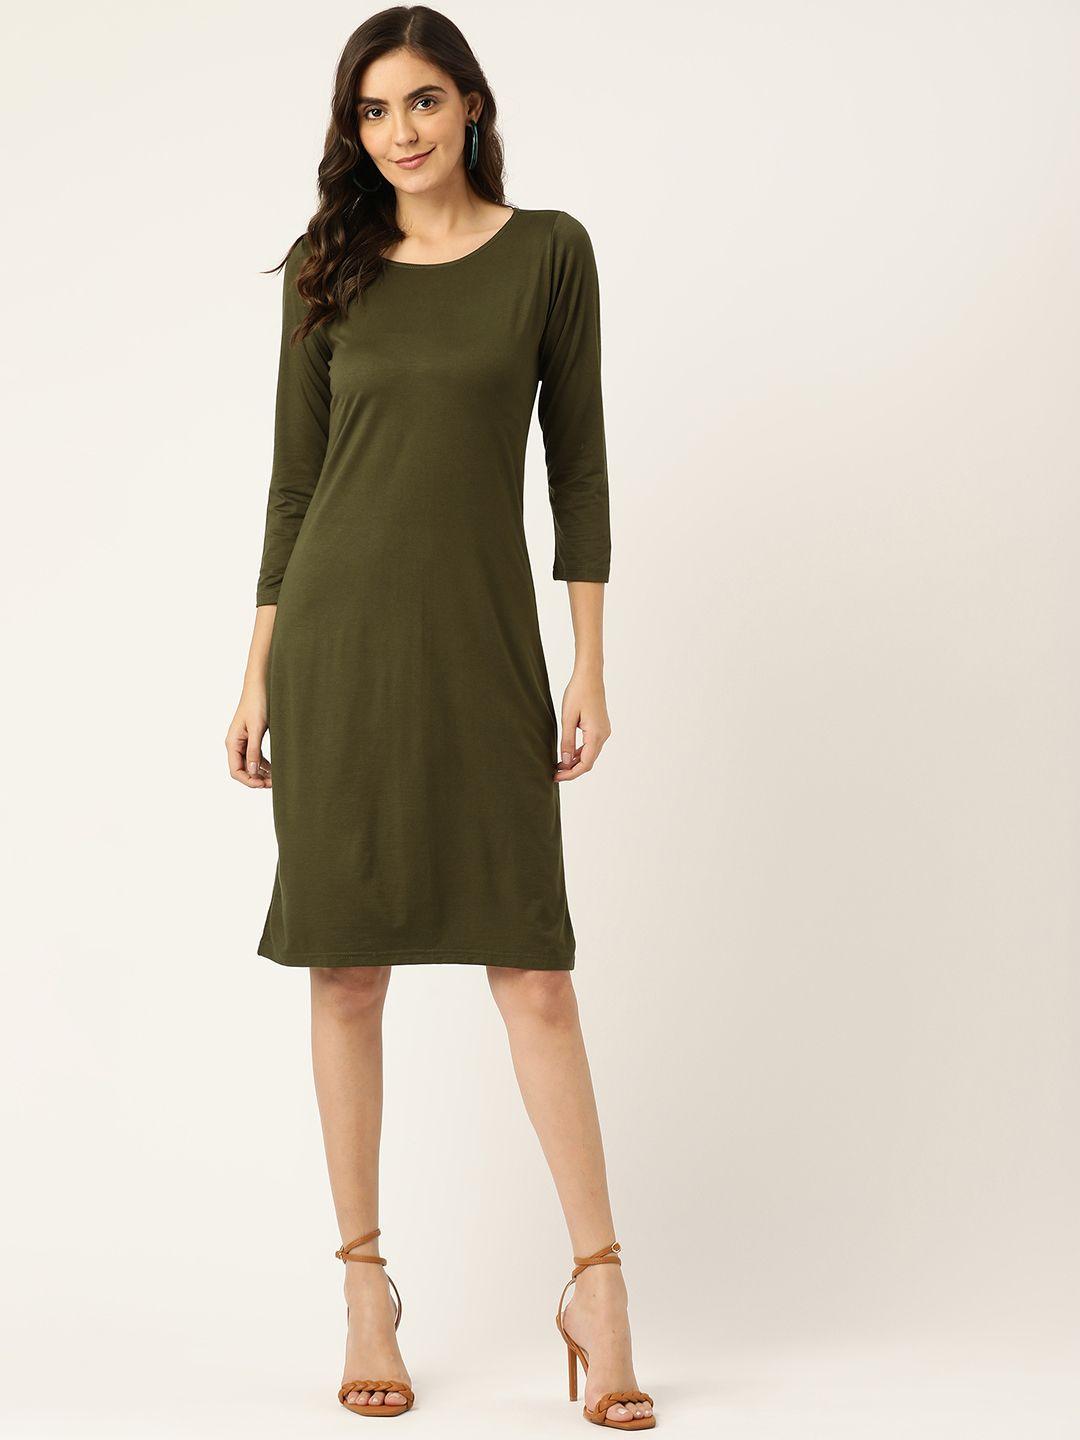 brinns olive green solid a-line dress